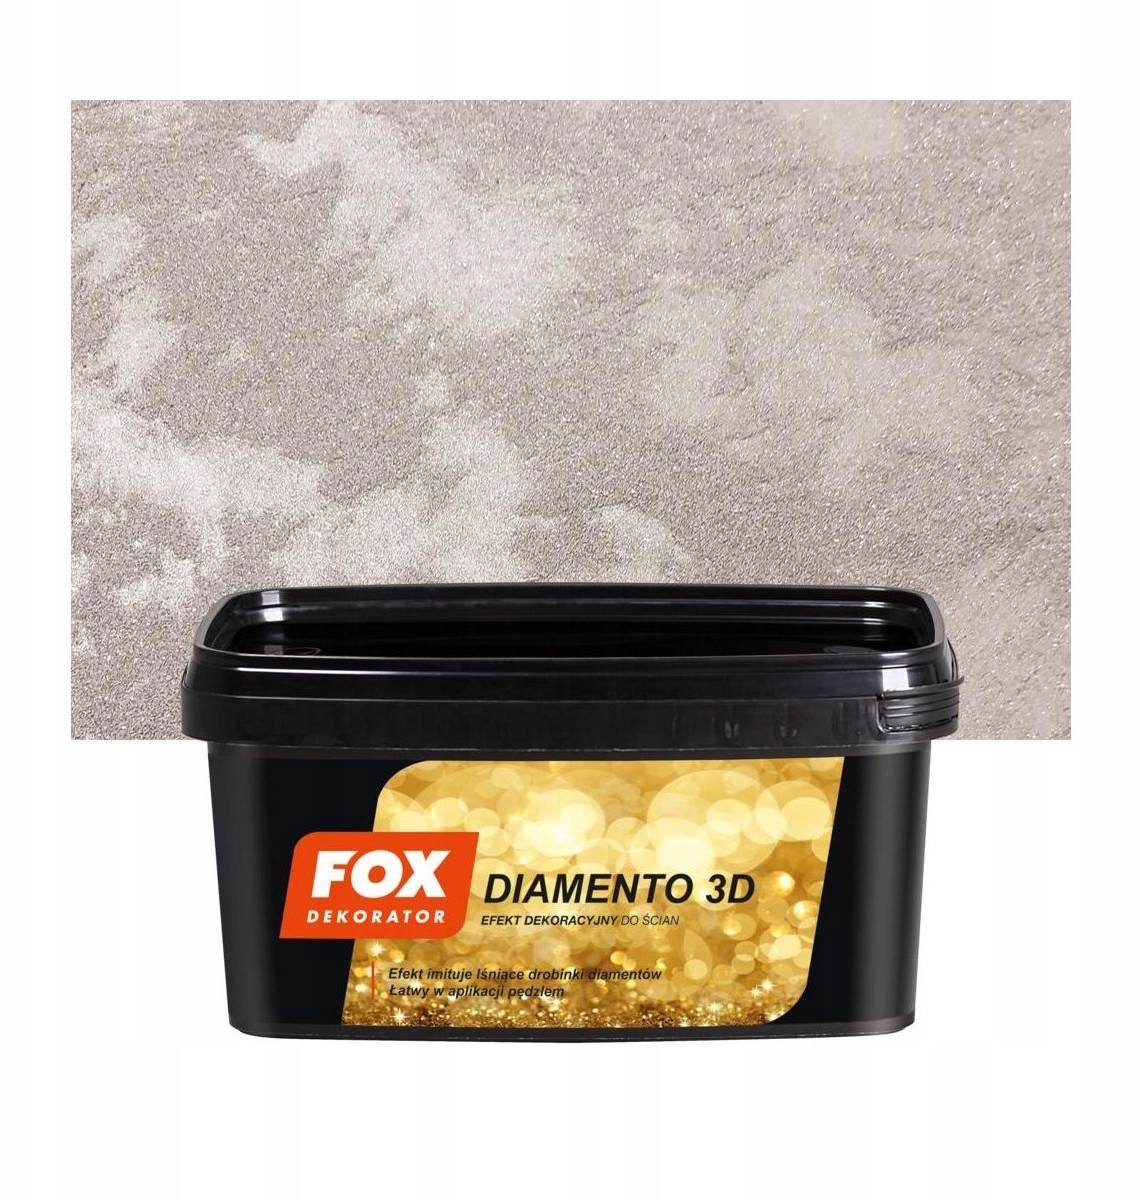 FOX Efekt dekoracyjny Diamento 3D 1 l Mars Fox